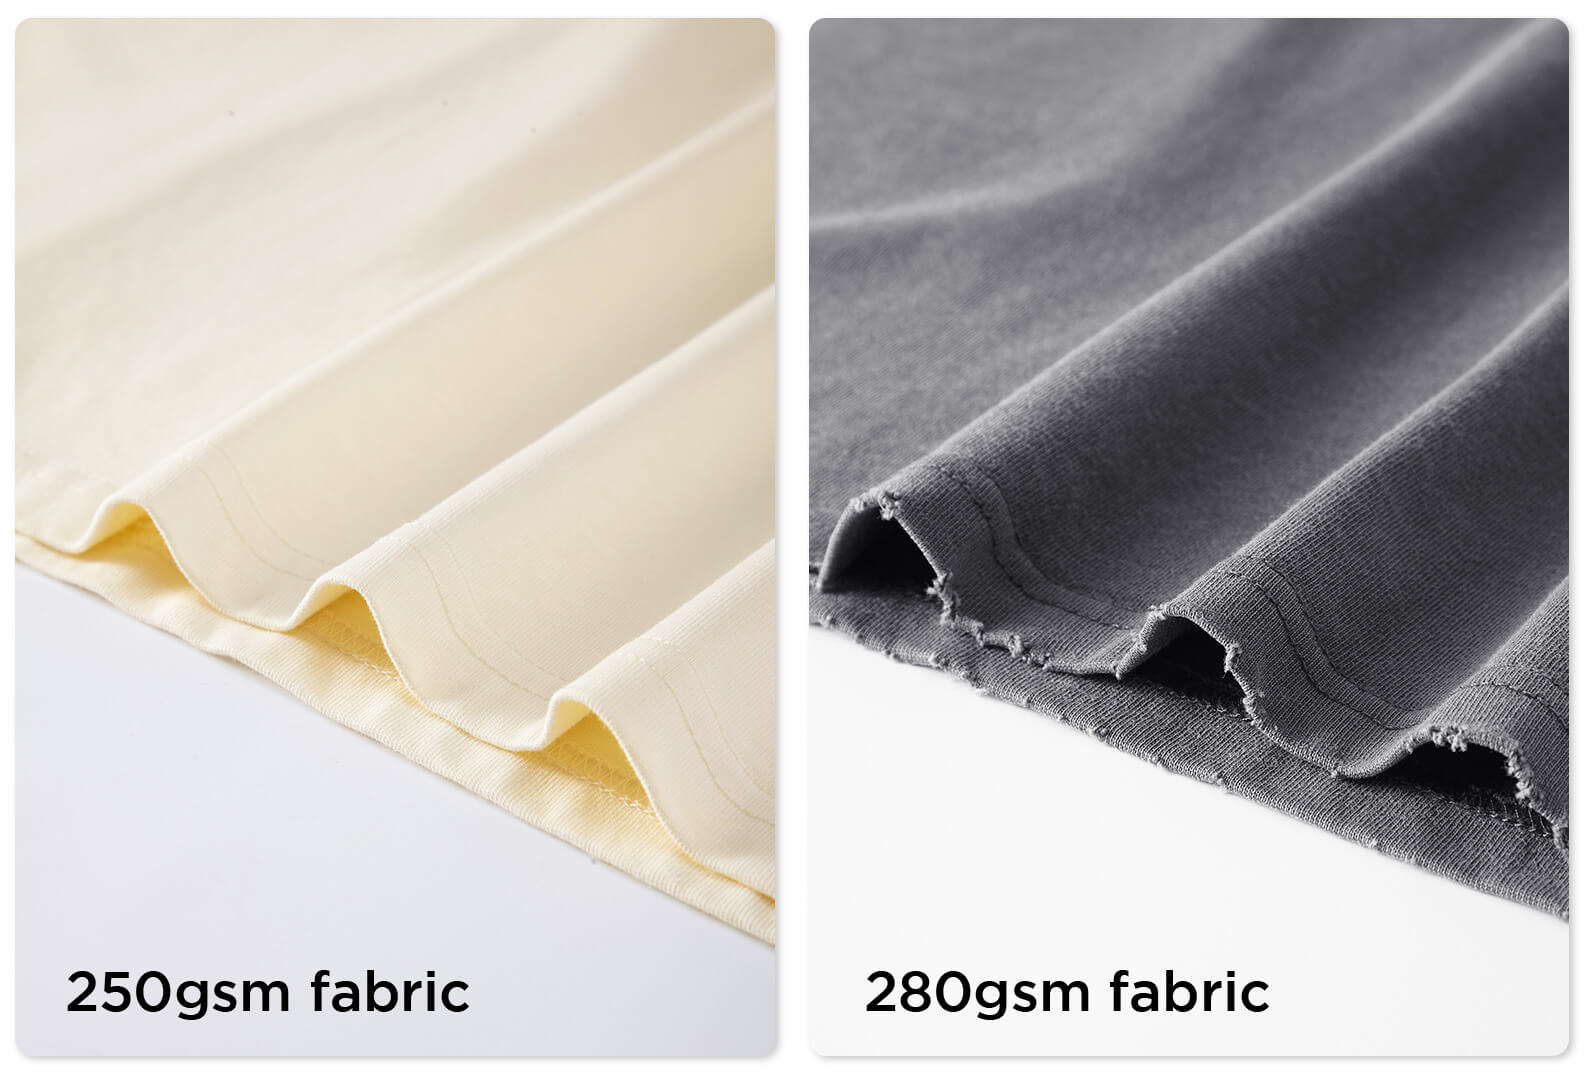 250gsm vs 280gsm fabric